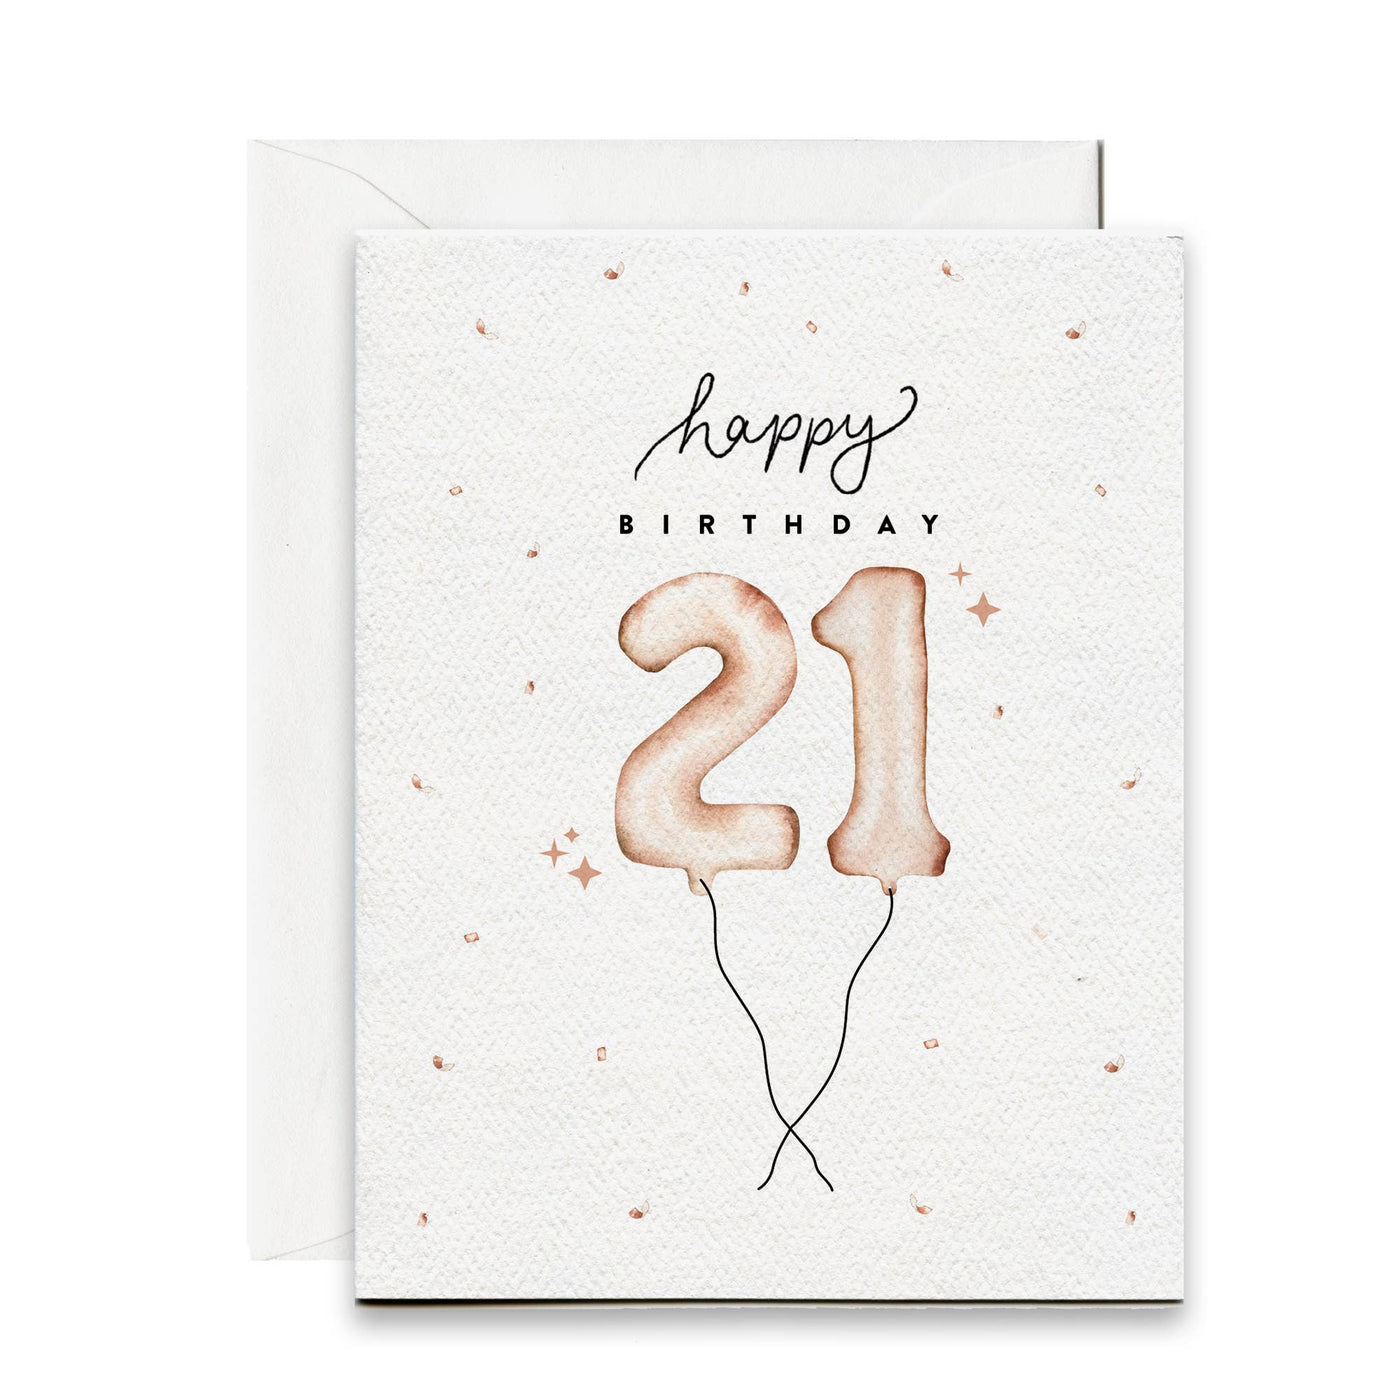 Pip & Cricket - Happy 21st Birthday Balloon Card